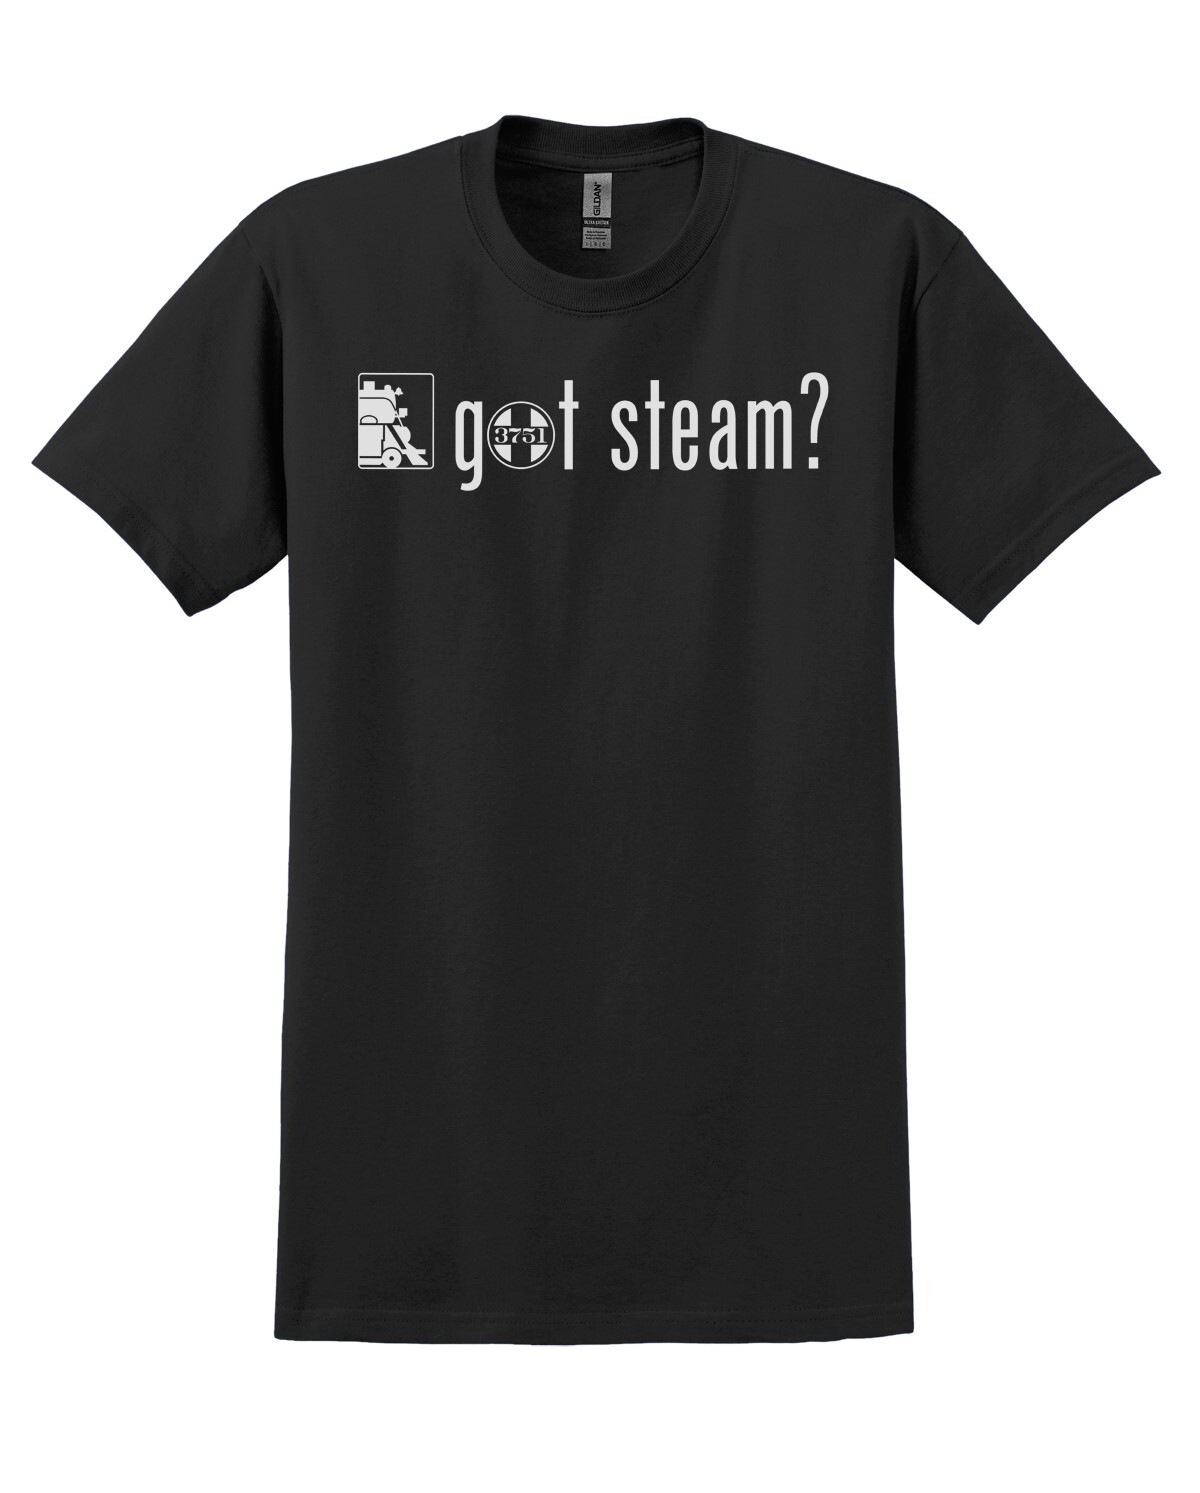 NEW!!! "Got Steam?" - (Black) - Large